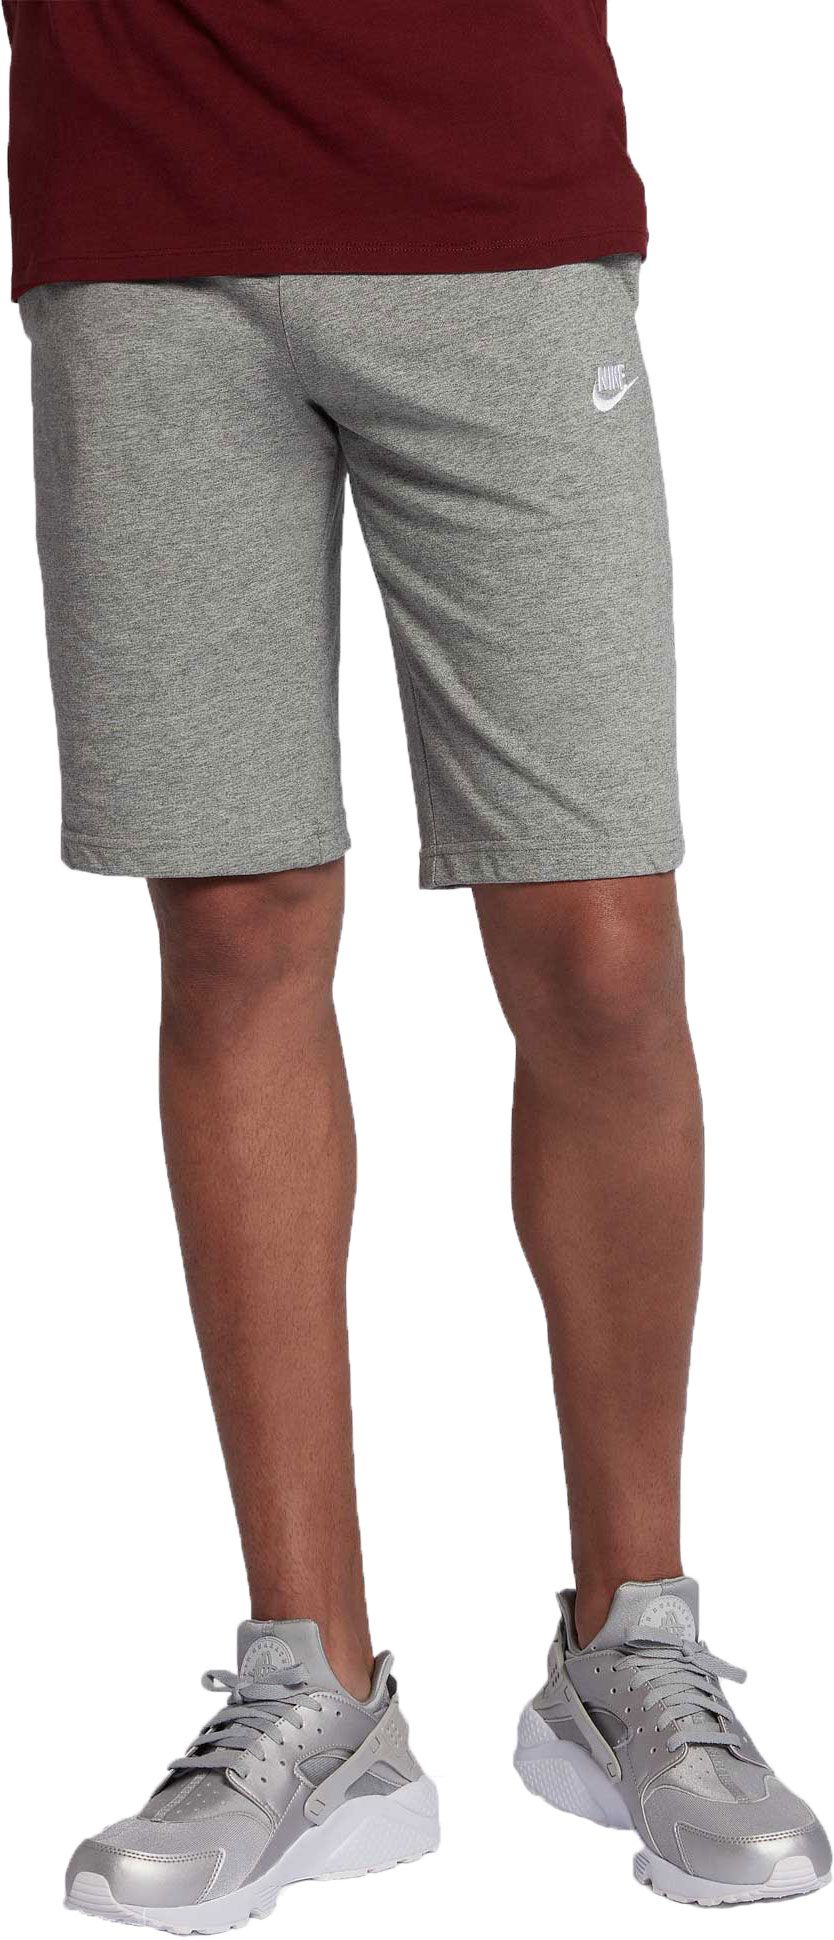 sweatpant shorts mens nike